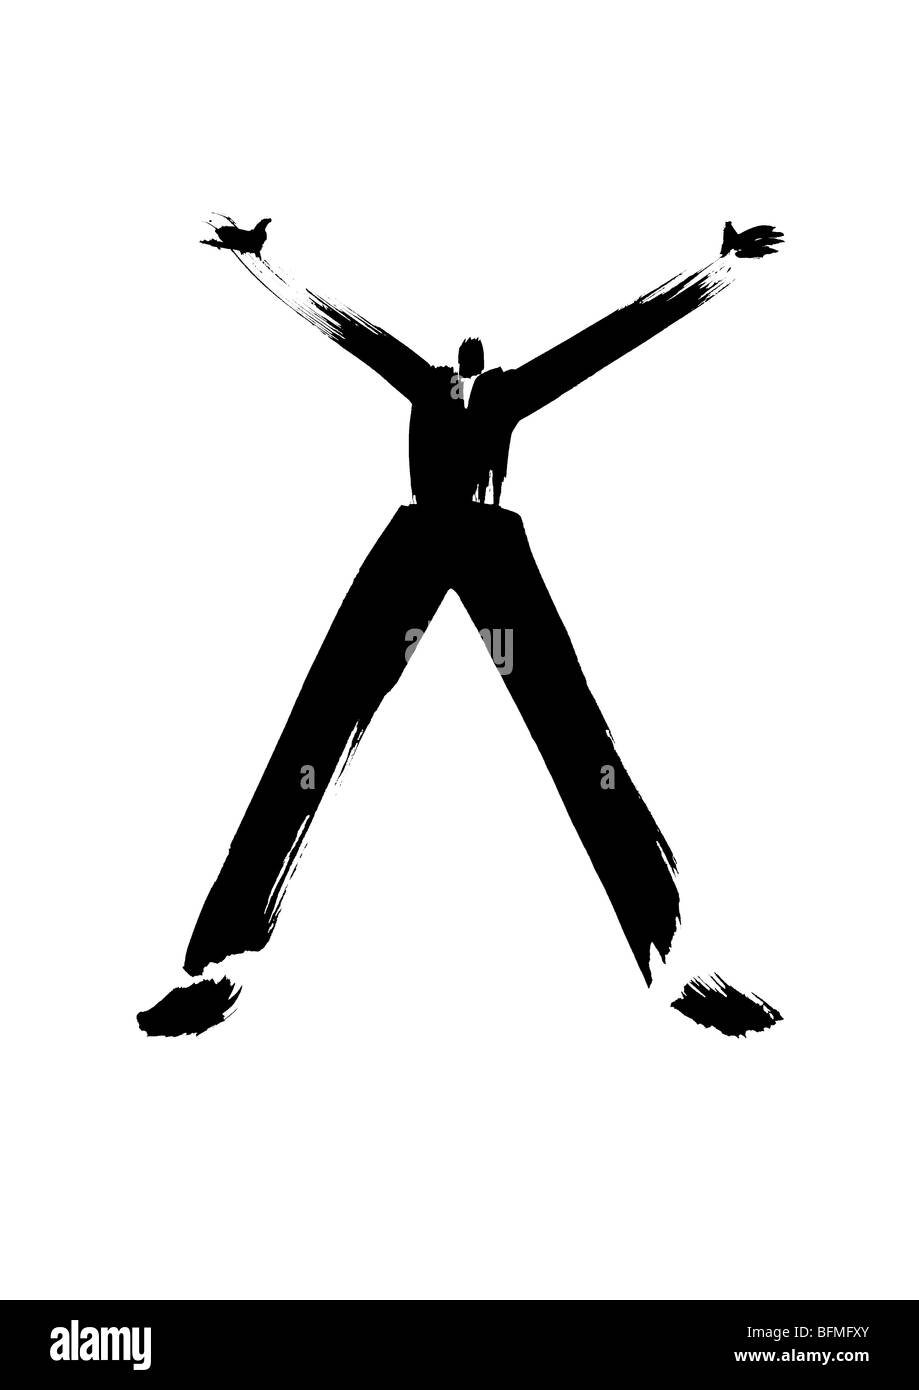 Illustration de businessman standing with arms raised, fond blanc Banque D'Images